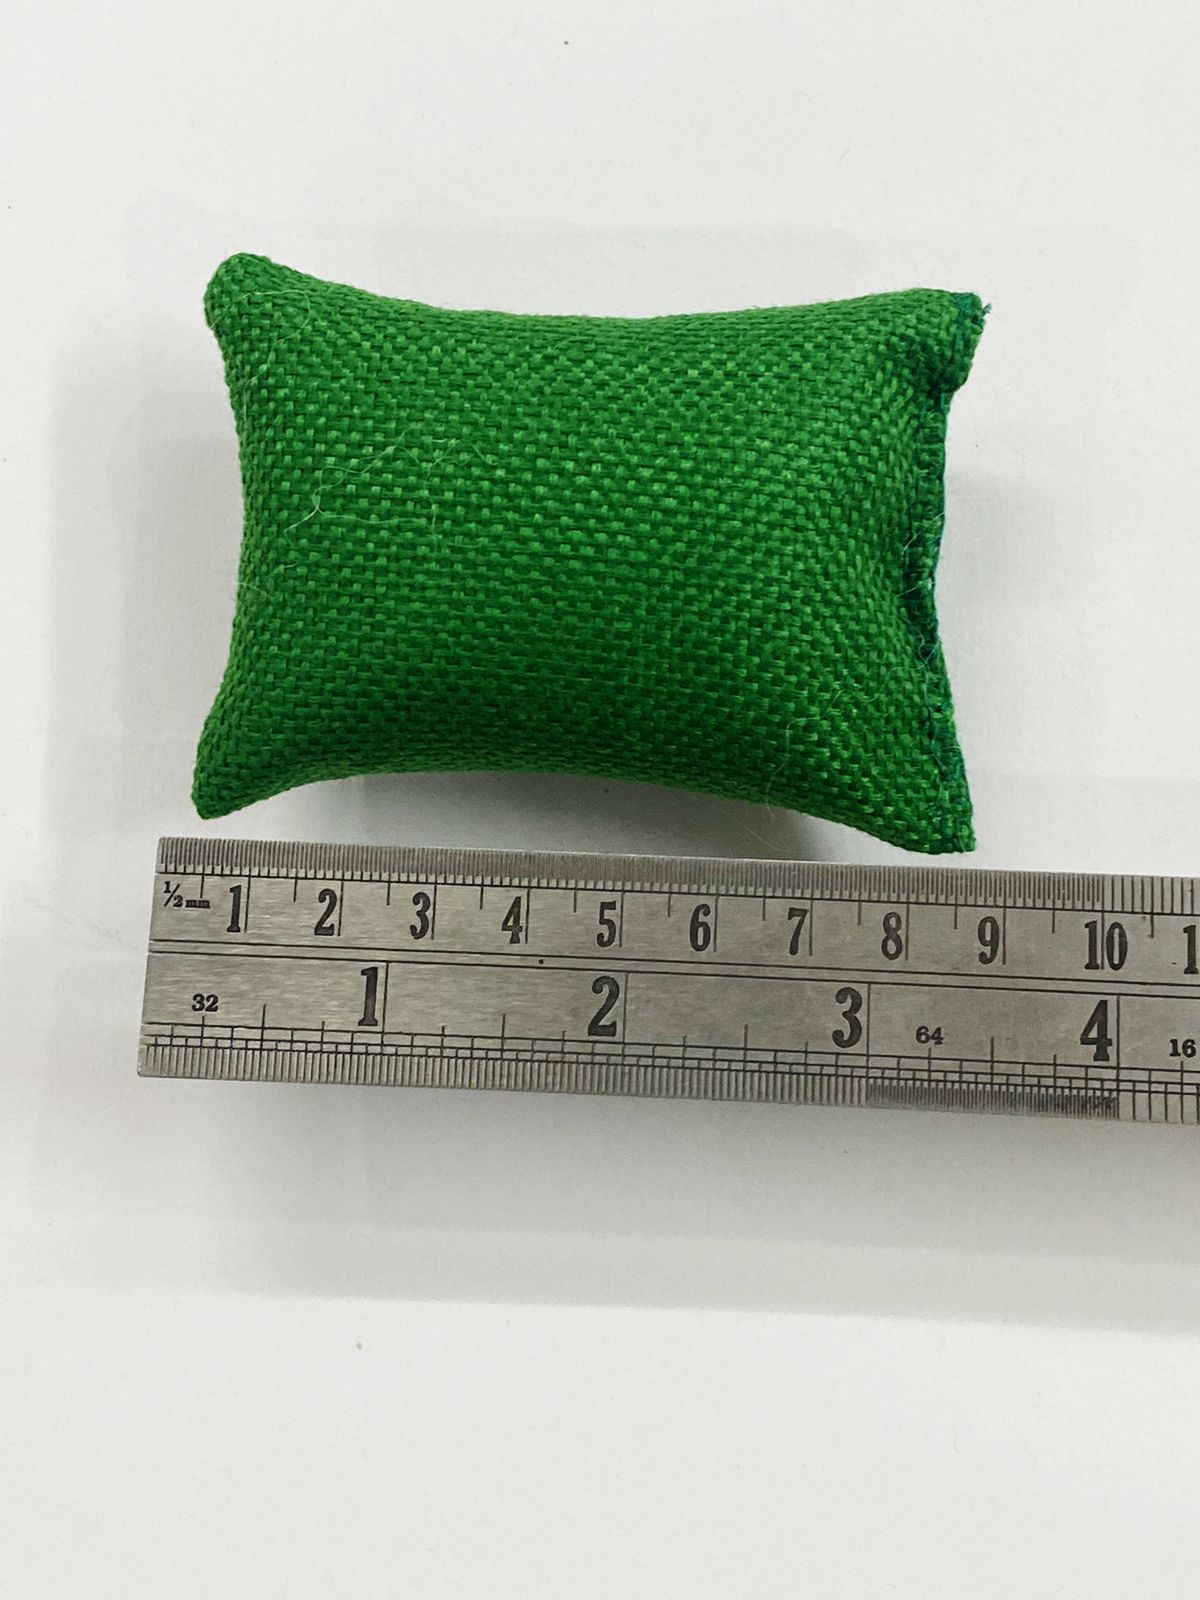 Rakhi Packaging Cushion Pillow- 1 piece – Green